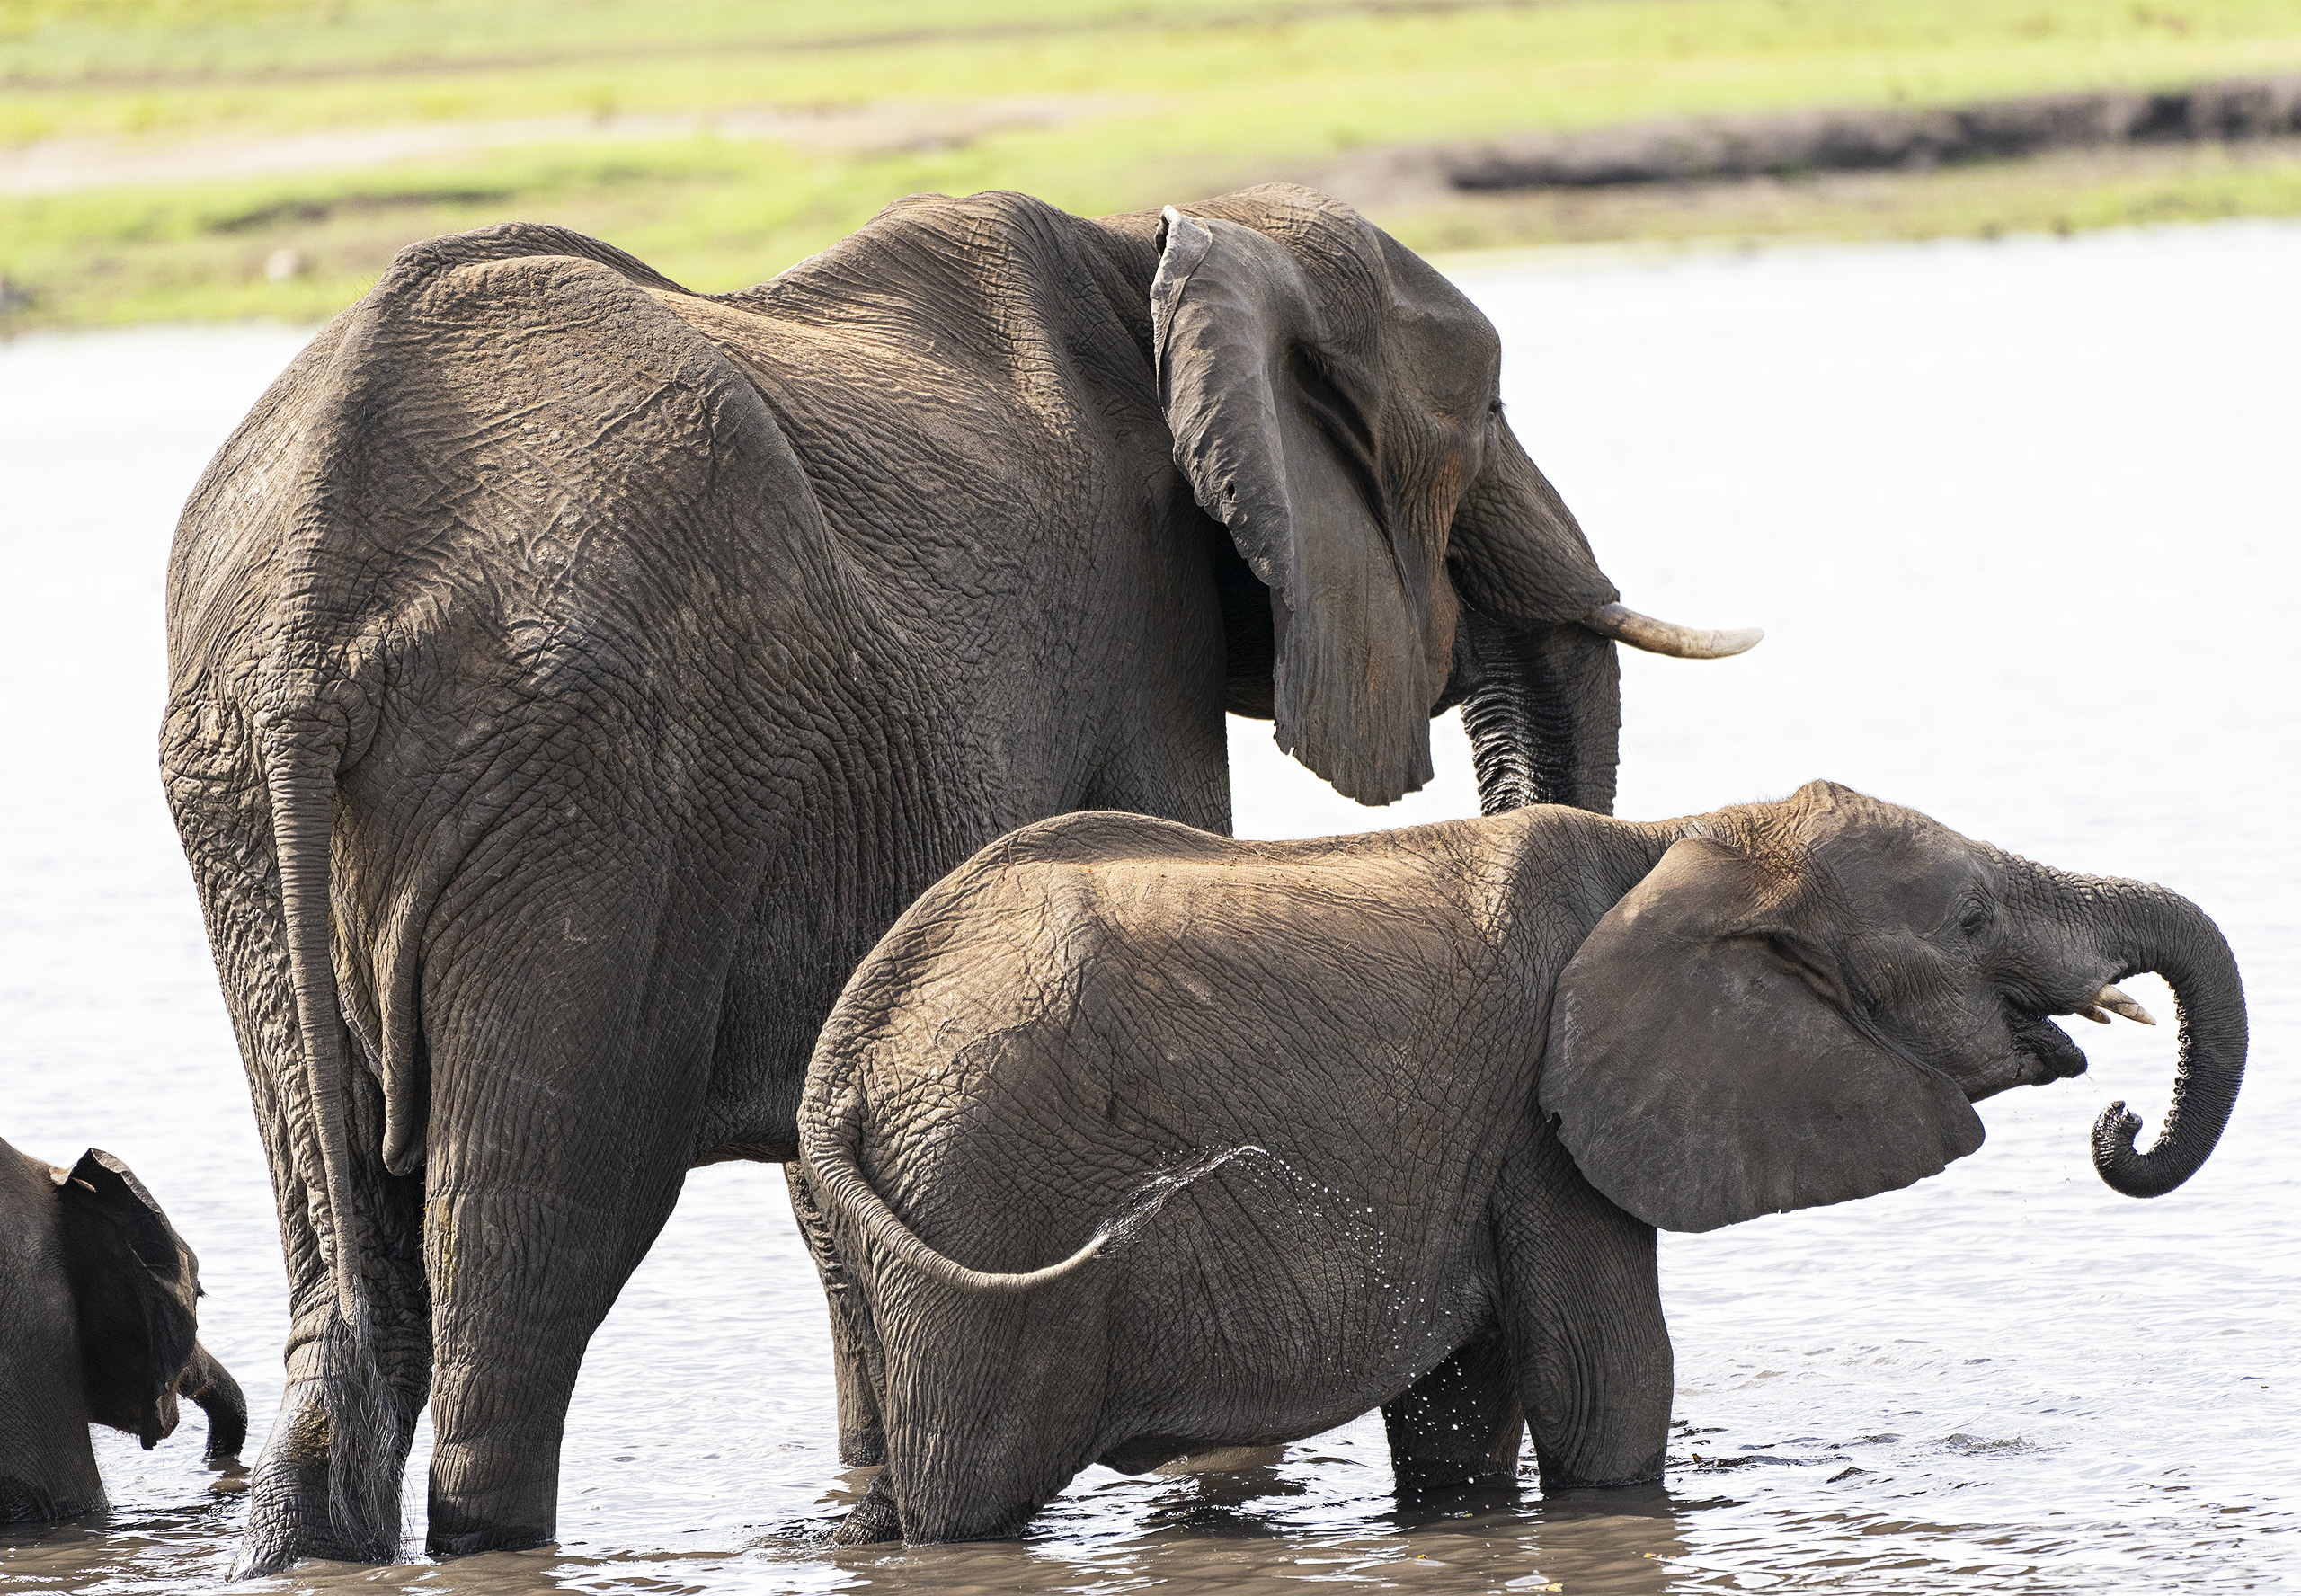 Elephants standing in water